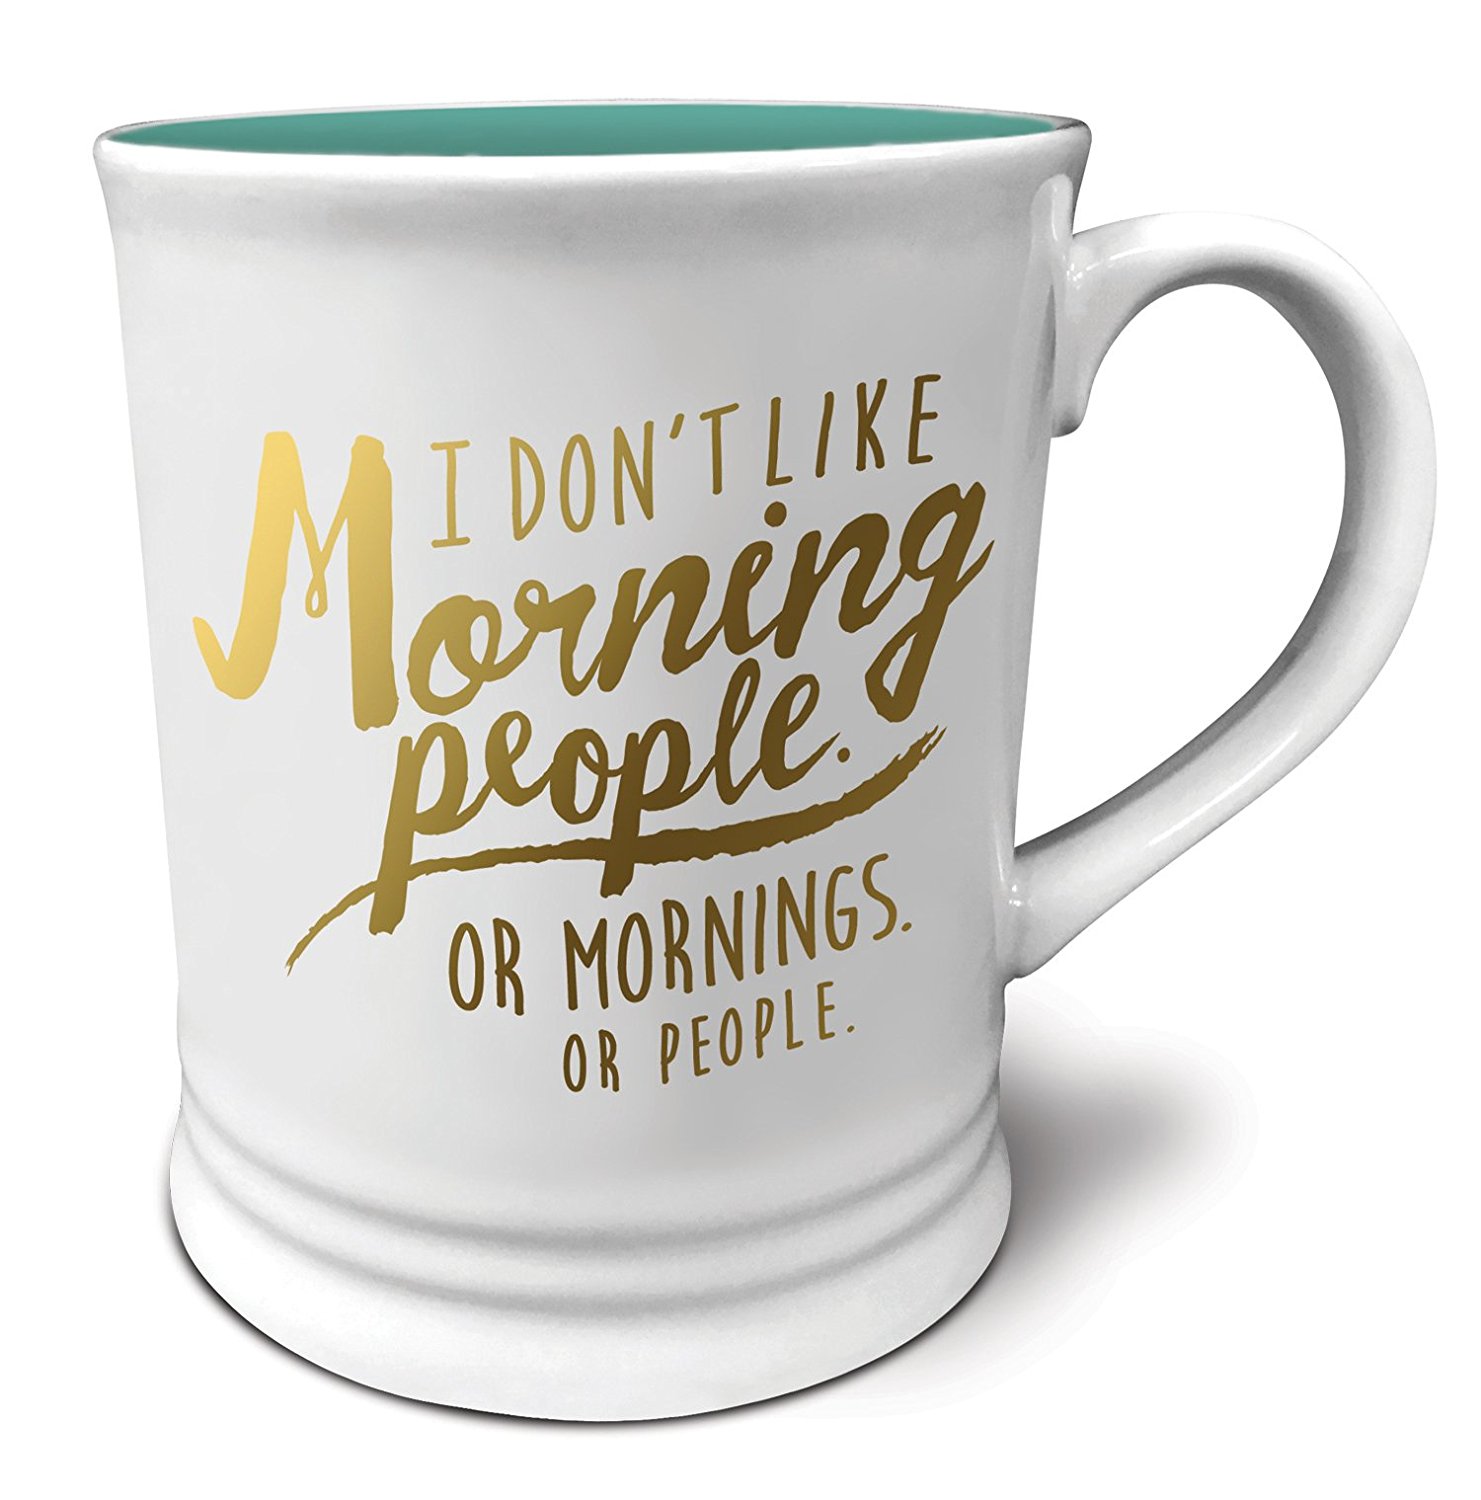 "I Don't Like Morning People. Or mornings. Or people." Mug